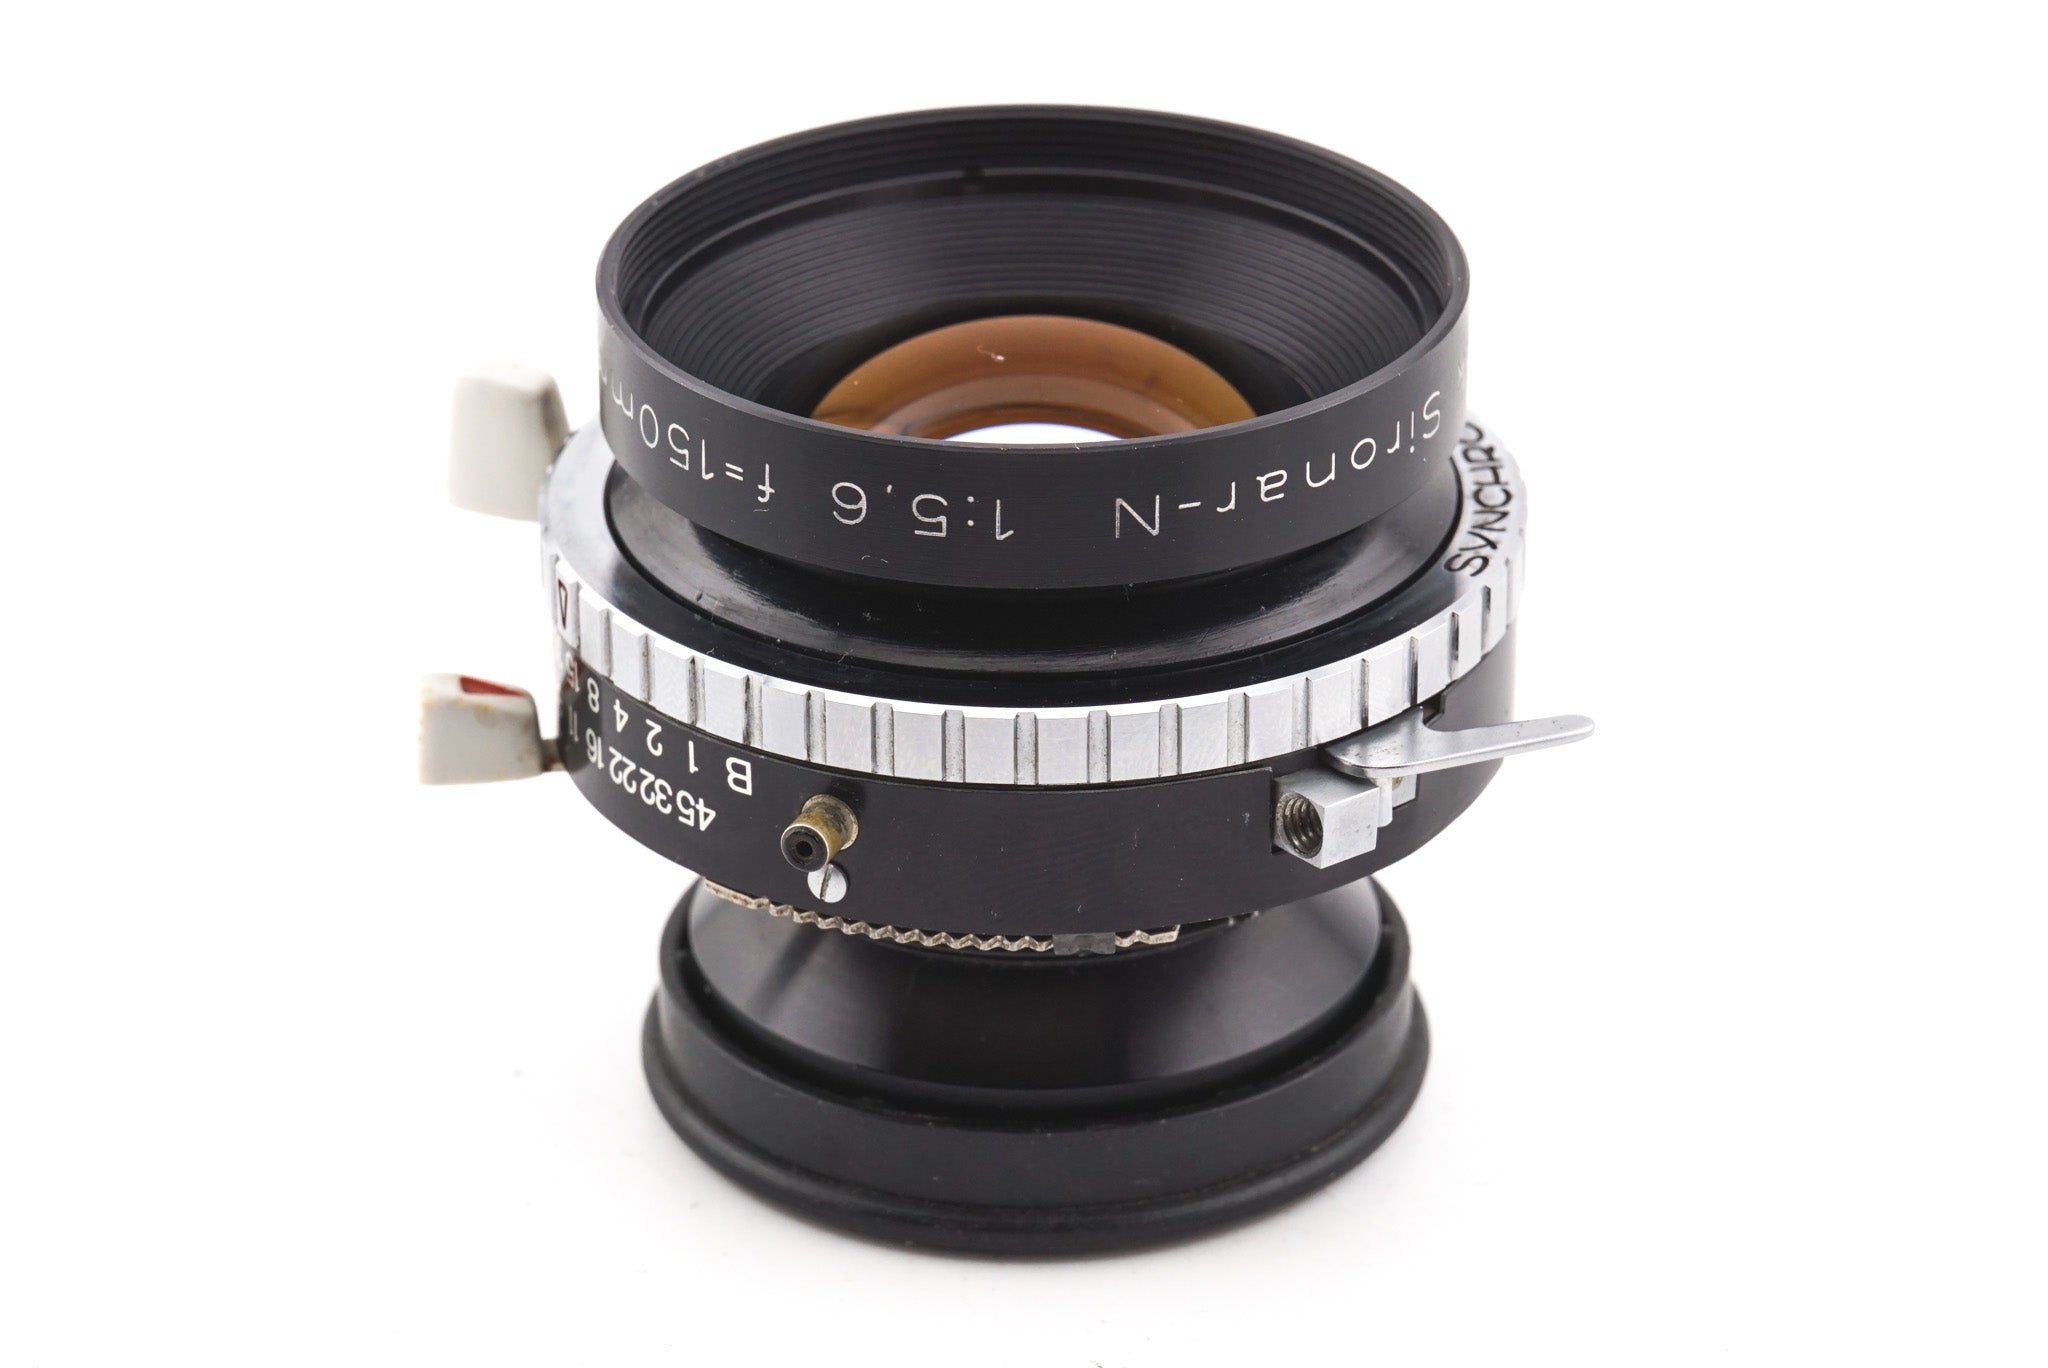 Rodenstock 150mm f5.6 Sironar-N/Sinaron-S MC (Shutter) - Lens